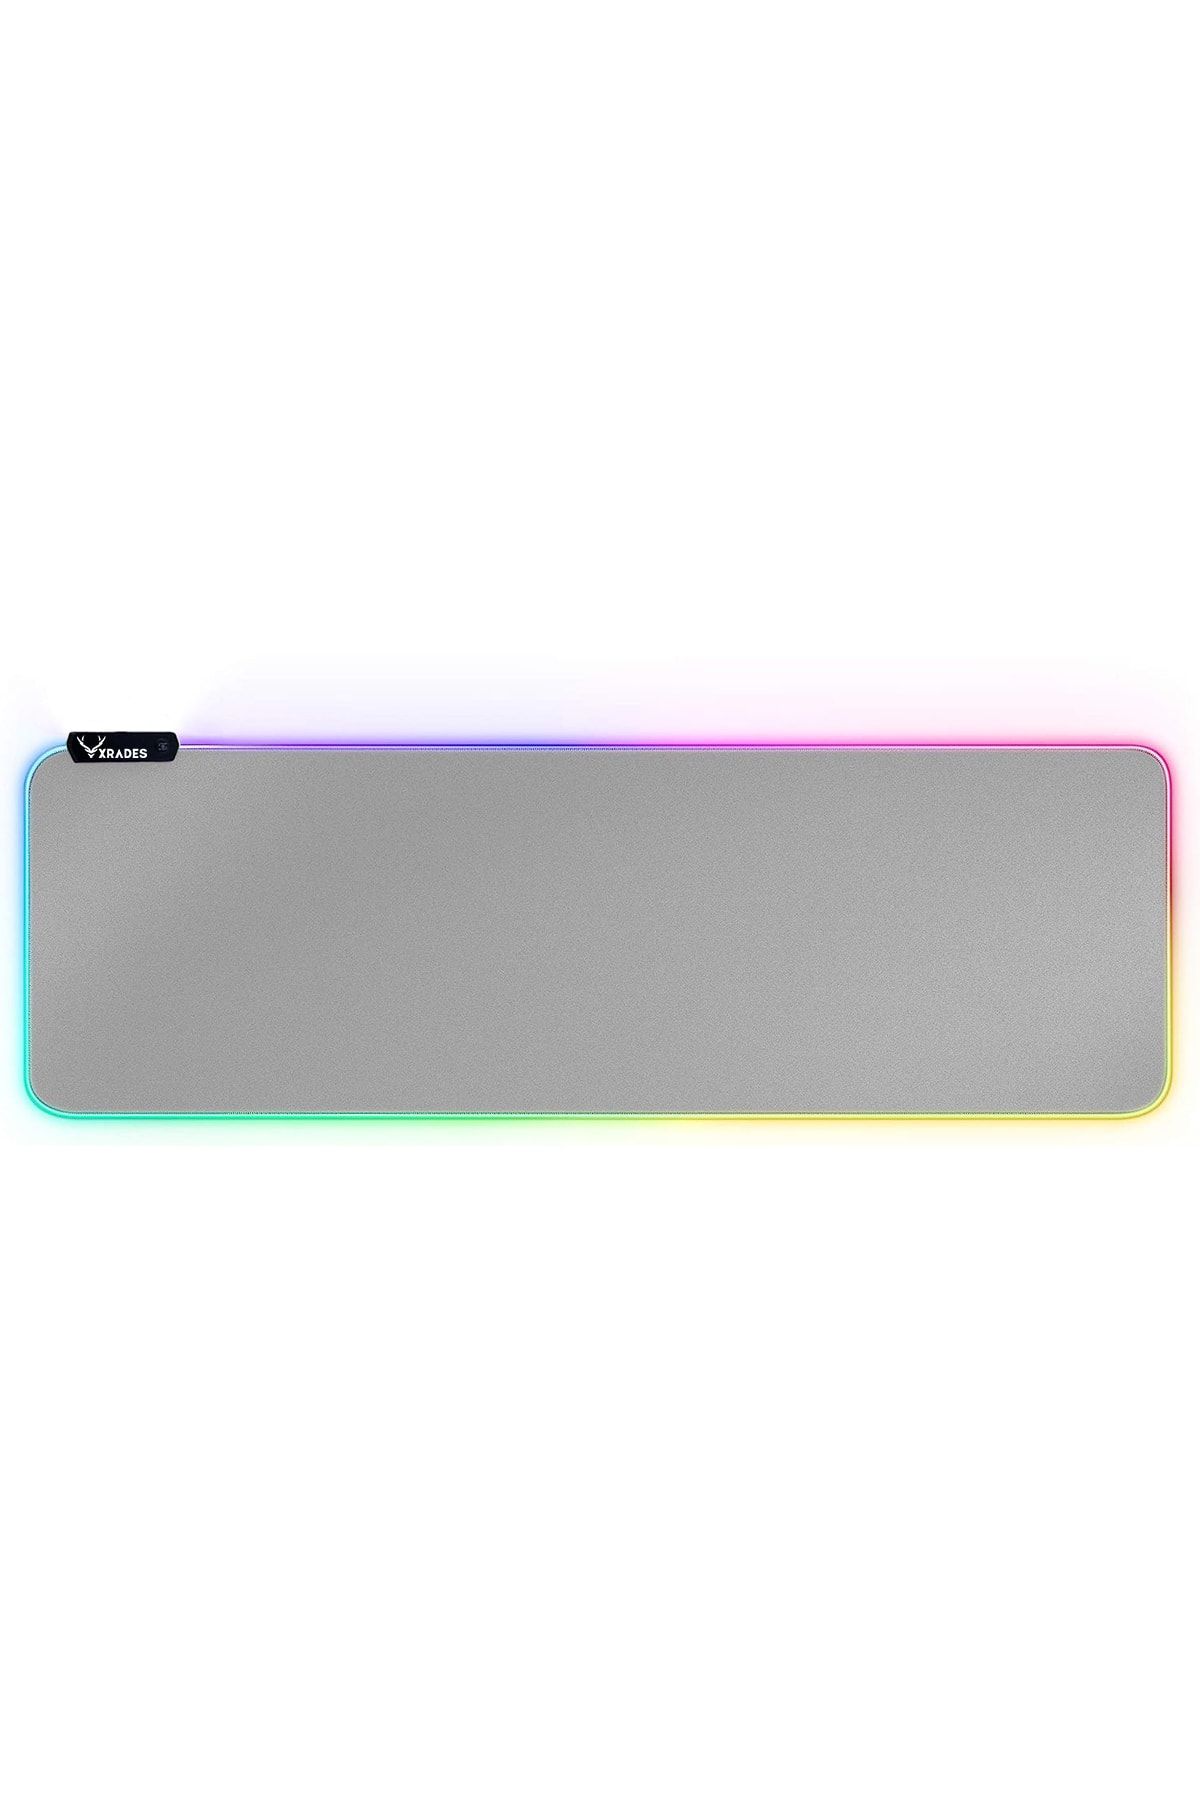 Xrades Gri Silver RGB Mousepad 80x30 cm 13 Farklı Renk Modu Su Geçirmez Oyuncu Gaming XL Mausepad